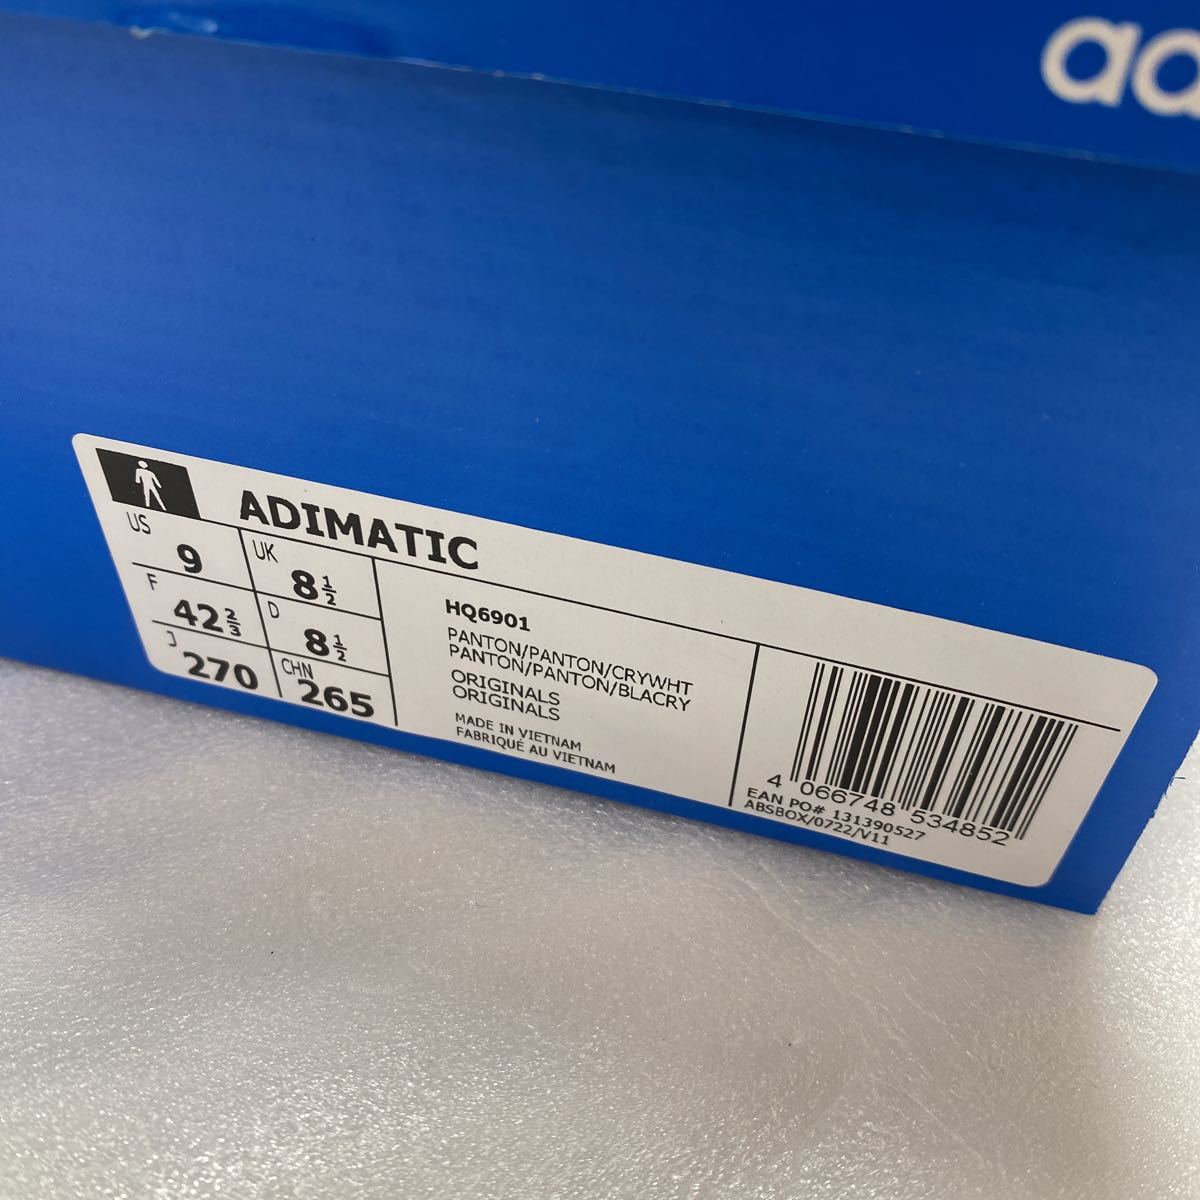  Adidas adidas Adi matic sneakers blue J 27.0cm new goods 